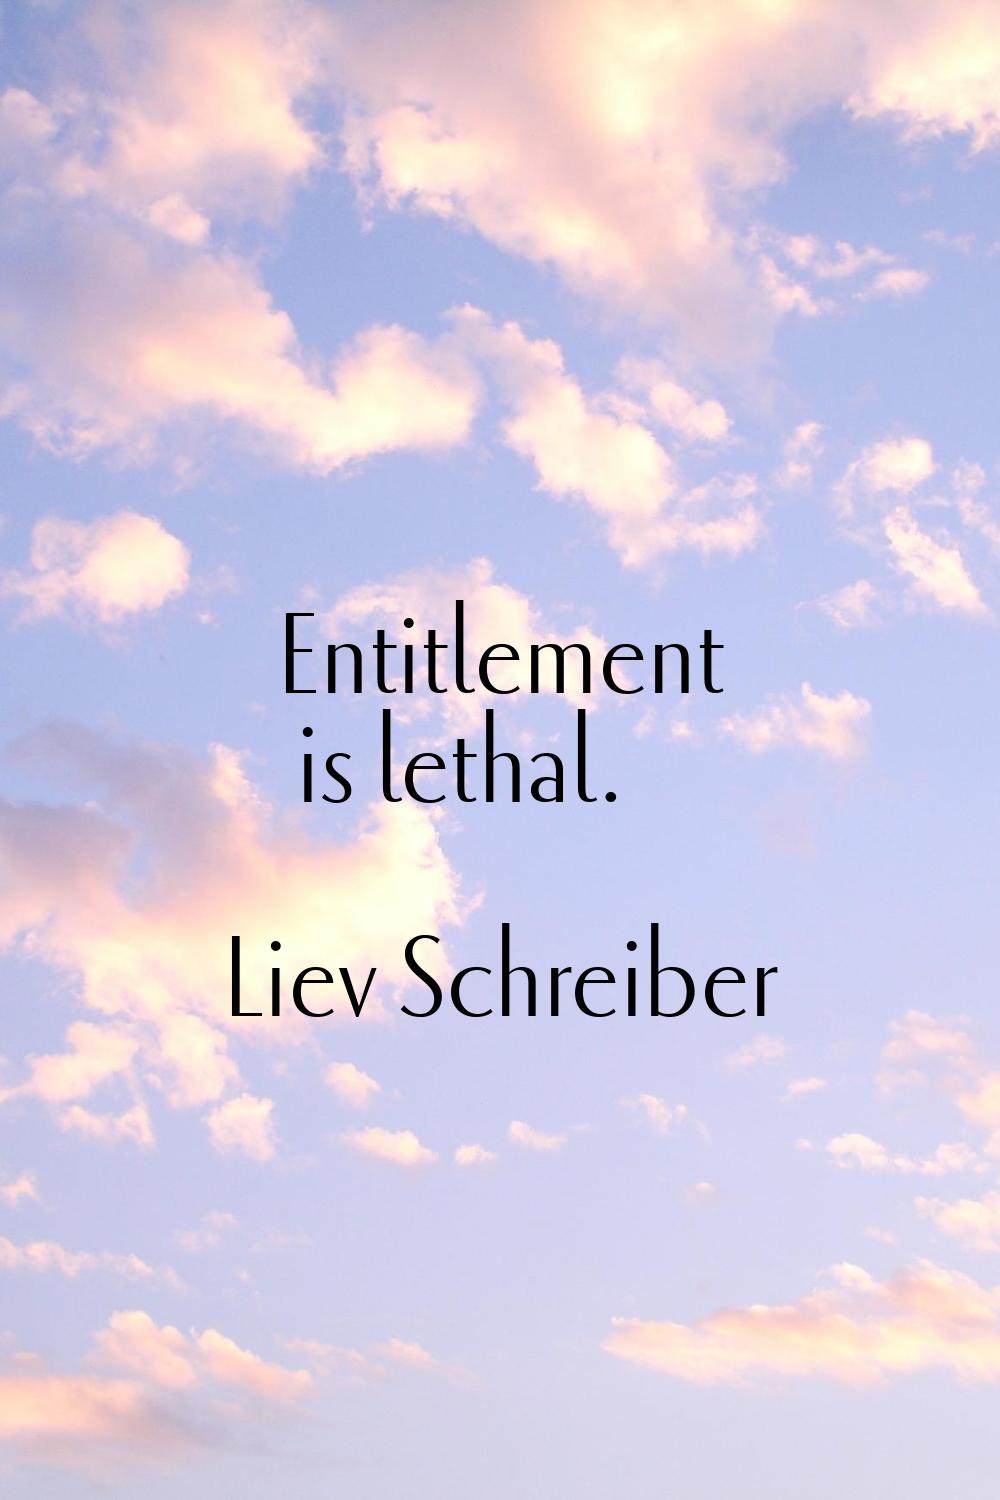 Entitlement is lethal.